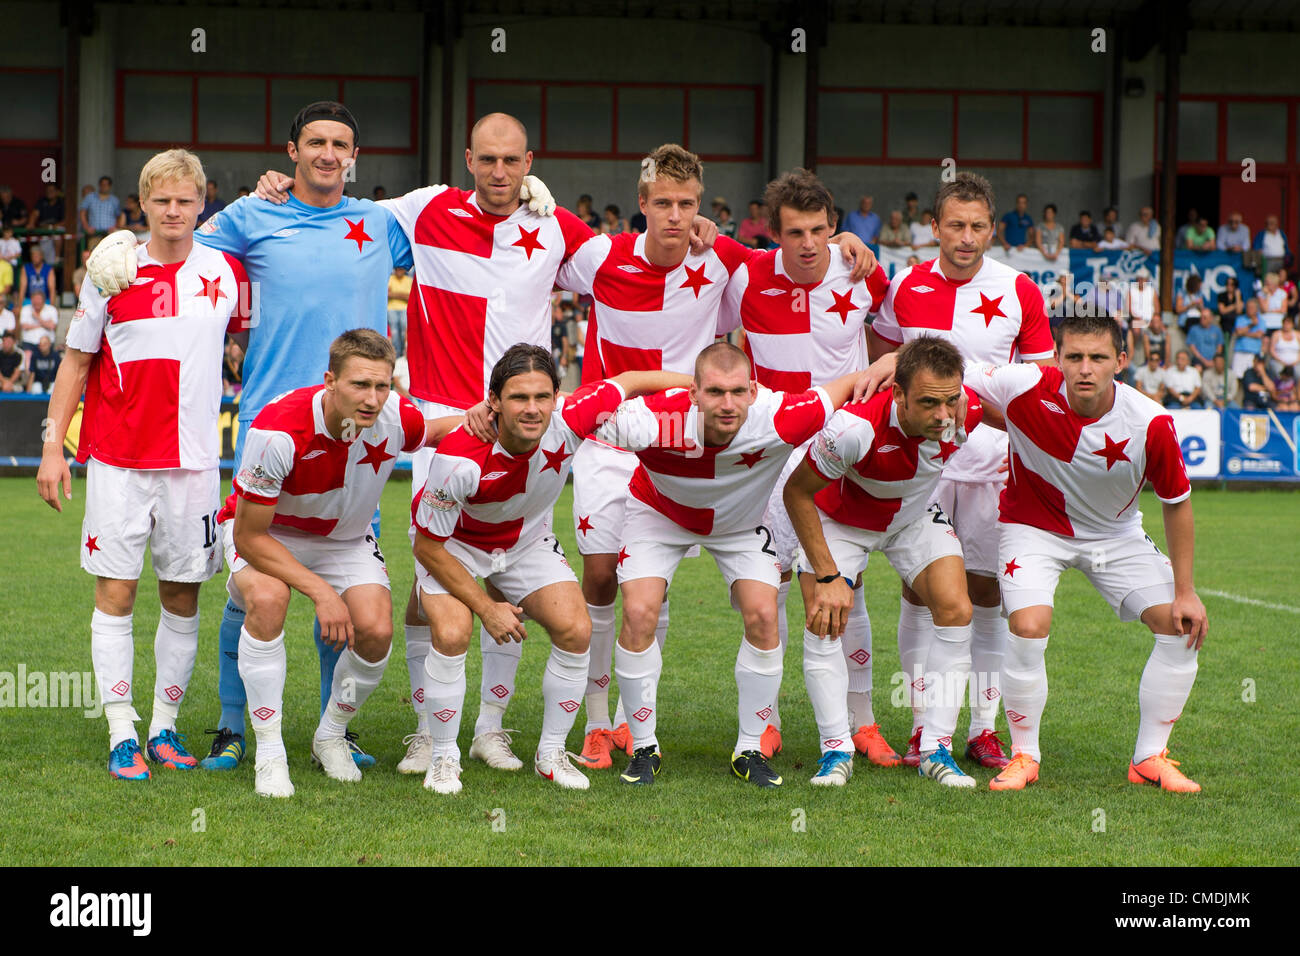 Slavia praha team hi-res stock photography and images - Alamy